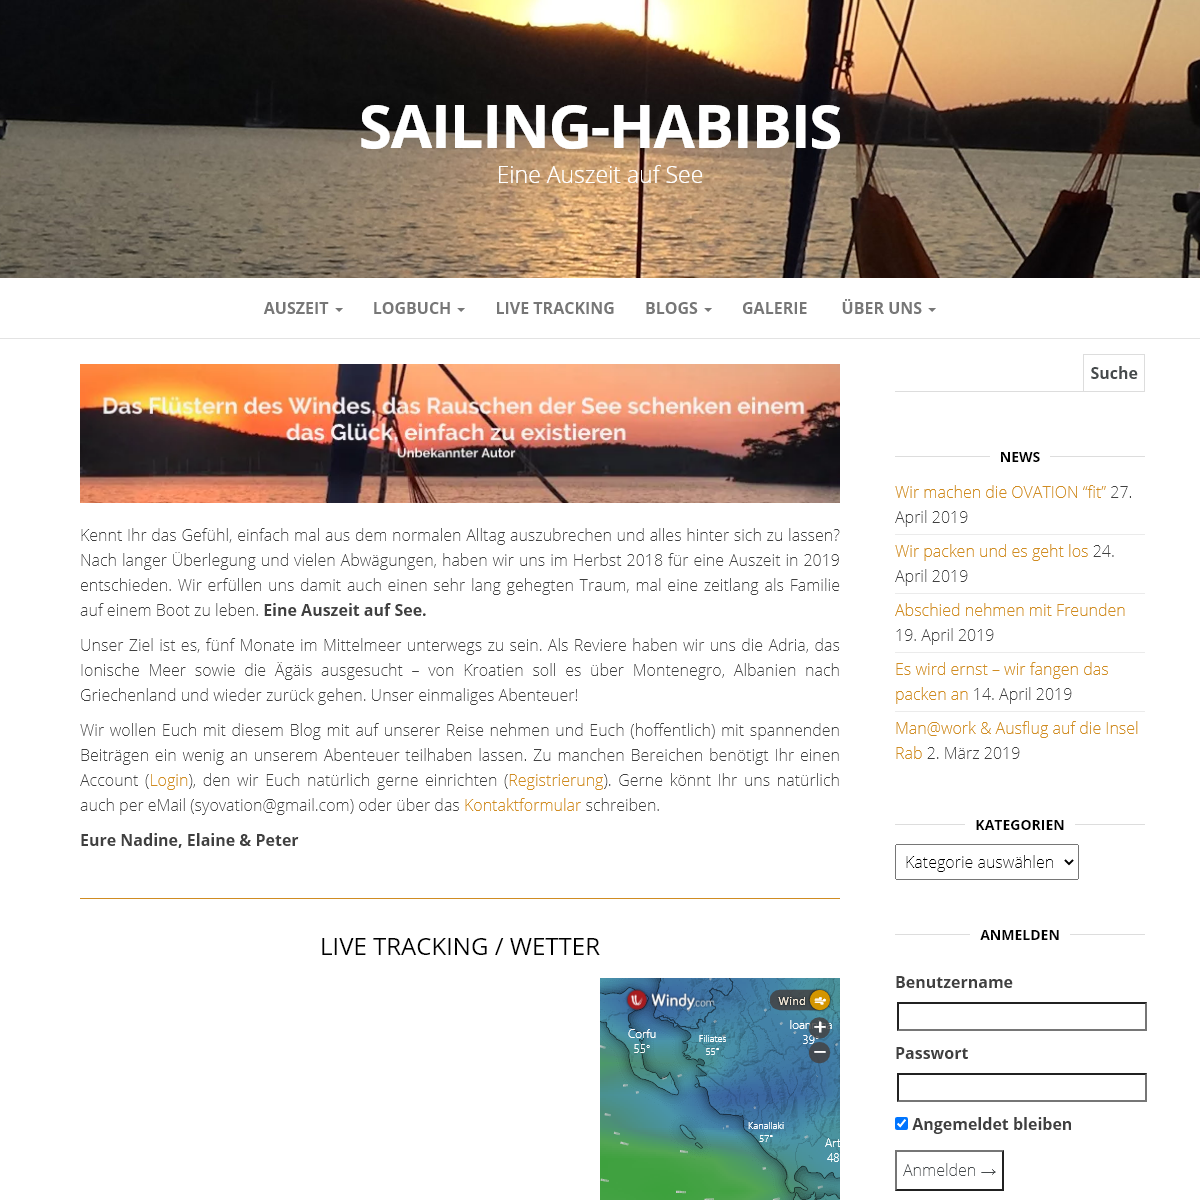 A complete backup of sailing-habibis.de